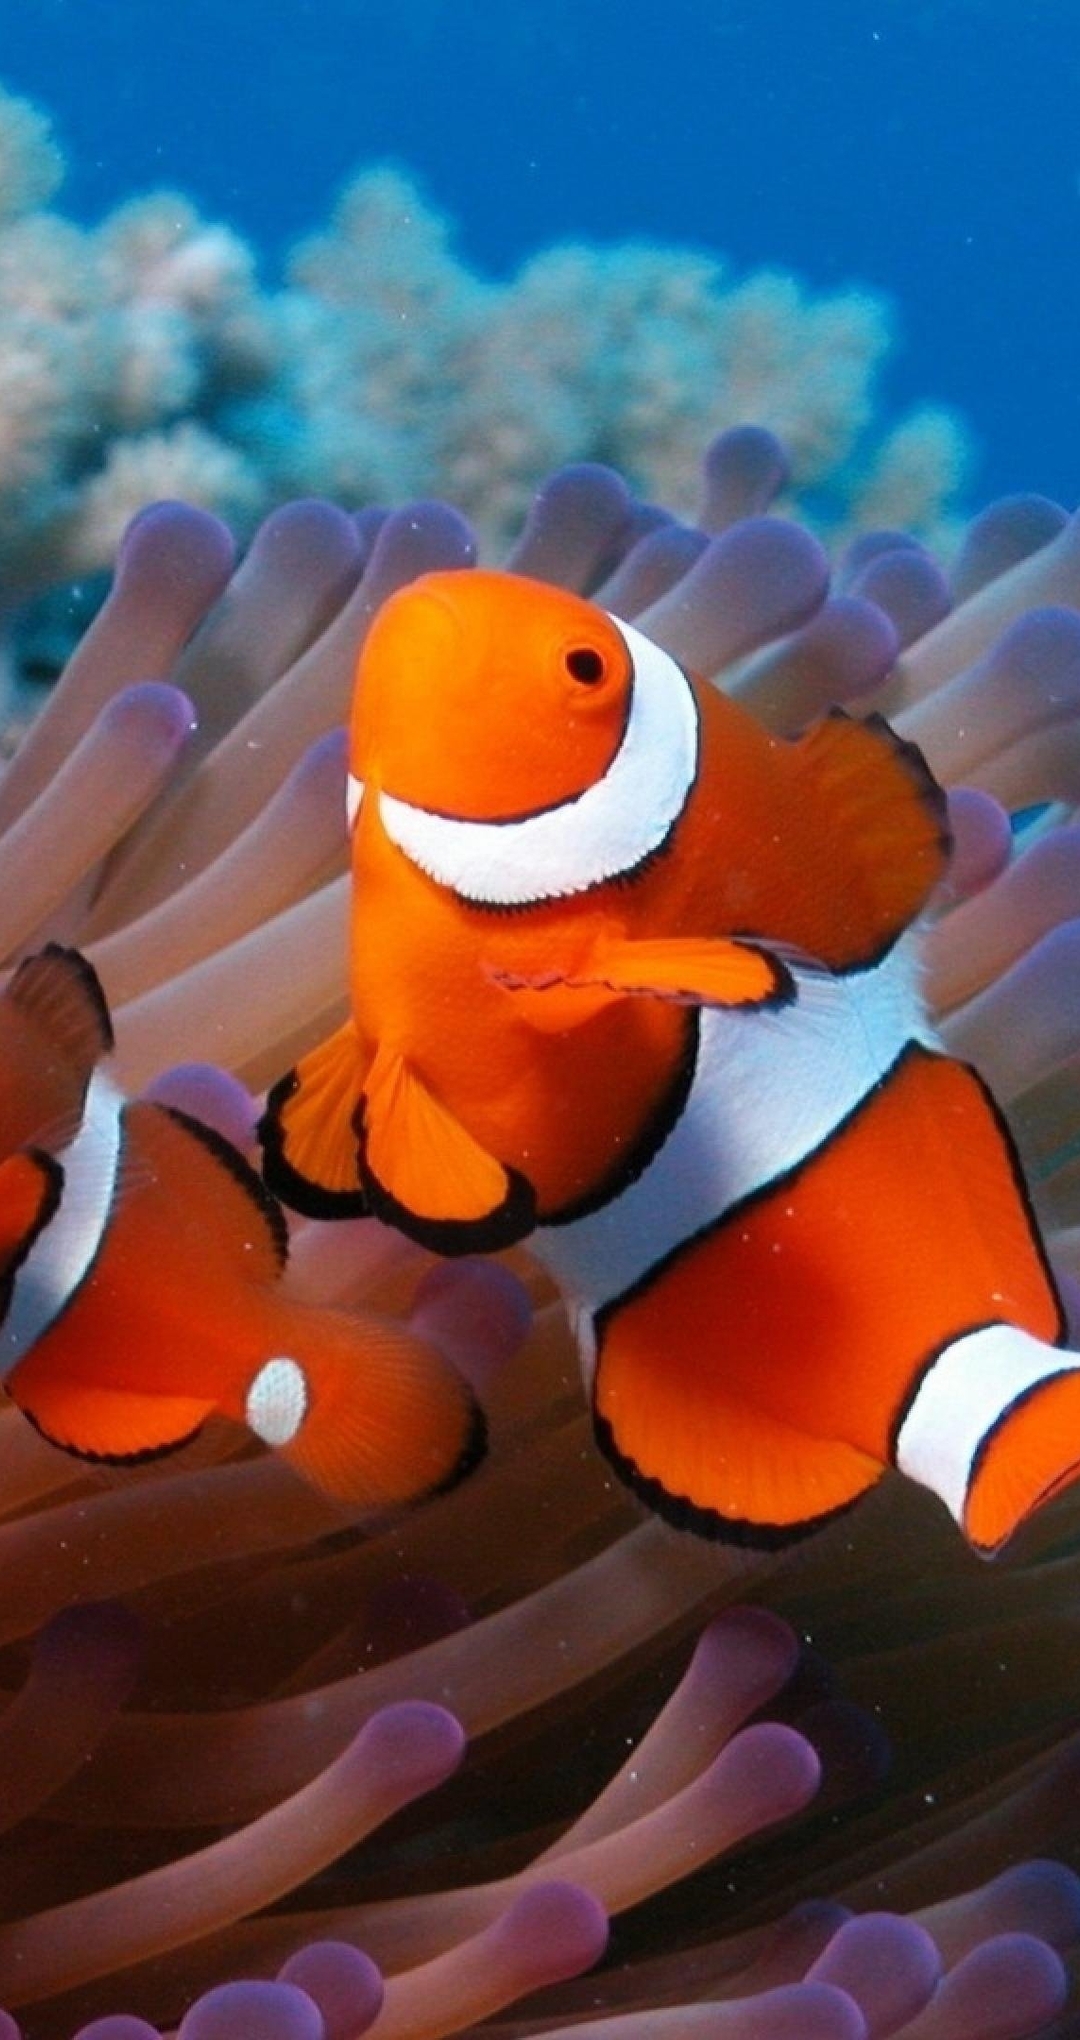 Картинка: Рыбки, две, кораллы, вода, морское дно, актиния, риф